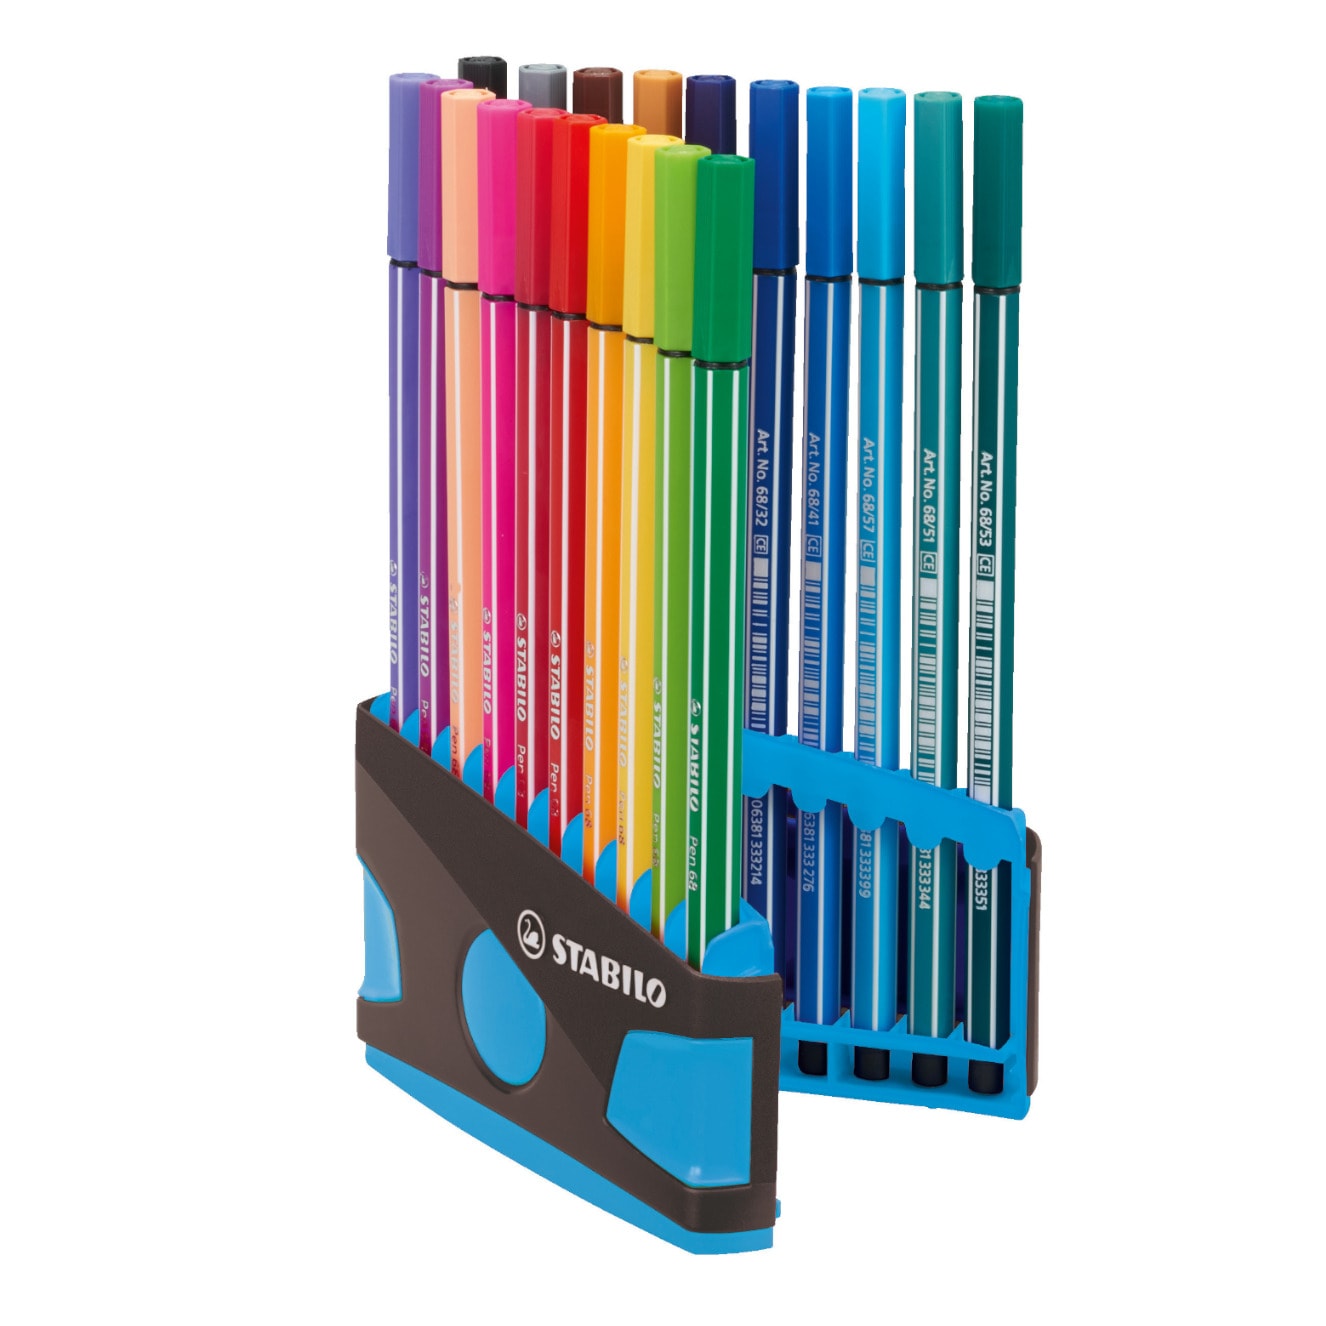  Stabilo Pen 68 Brush Marker - 20 Pen Set (19 Colors)